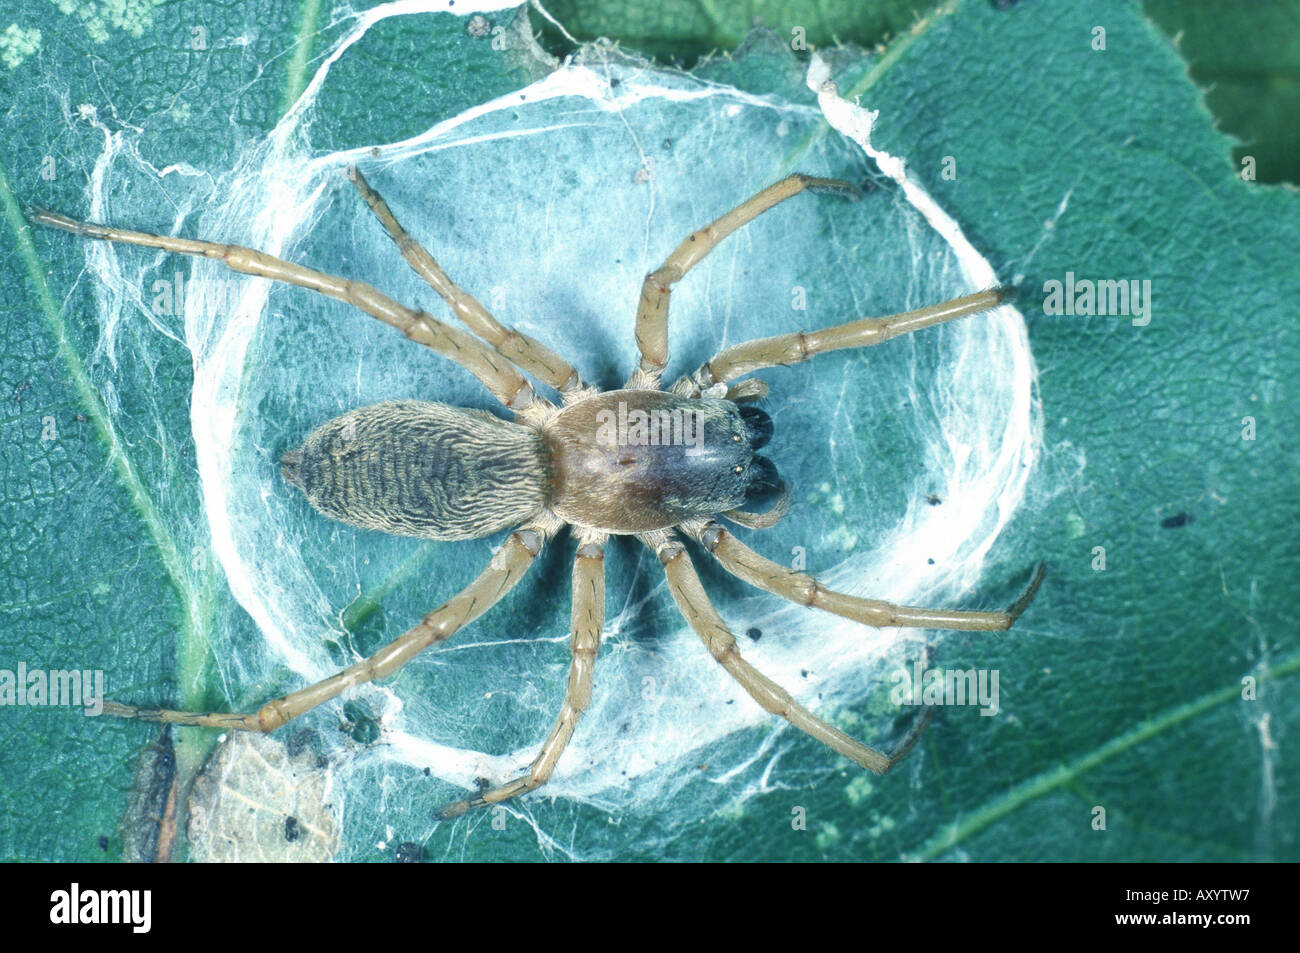 sac spider (Clubiona phragmitis) Stock Photo